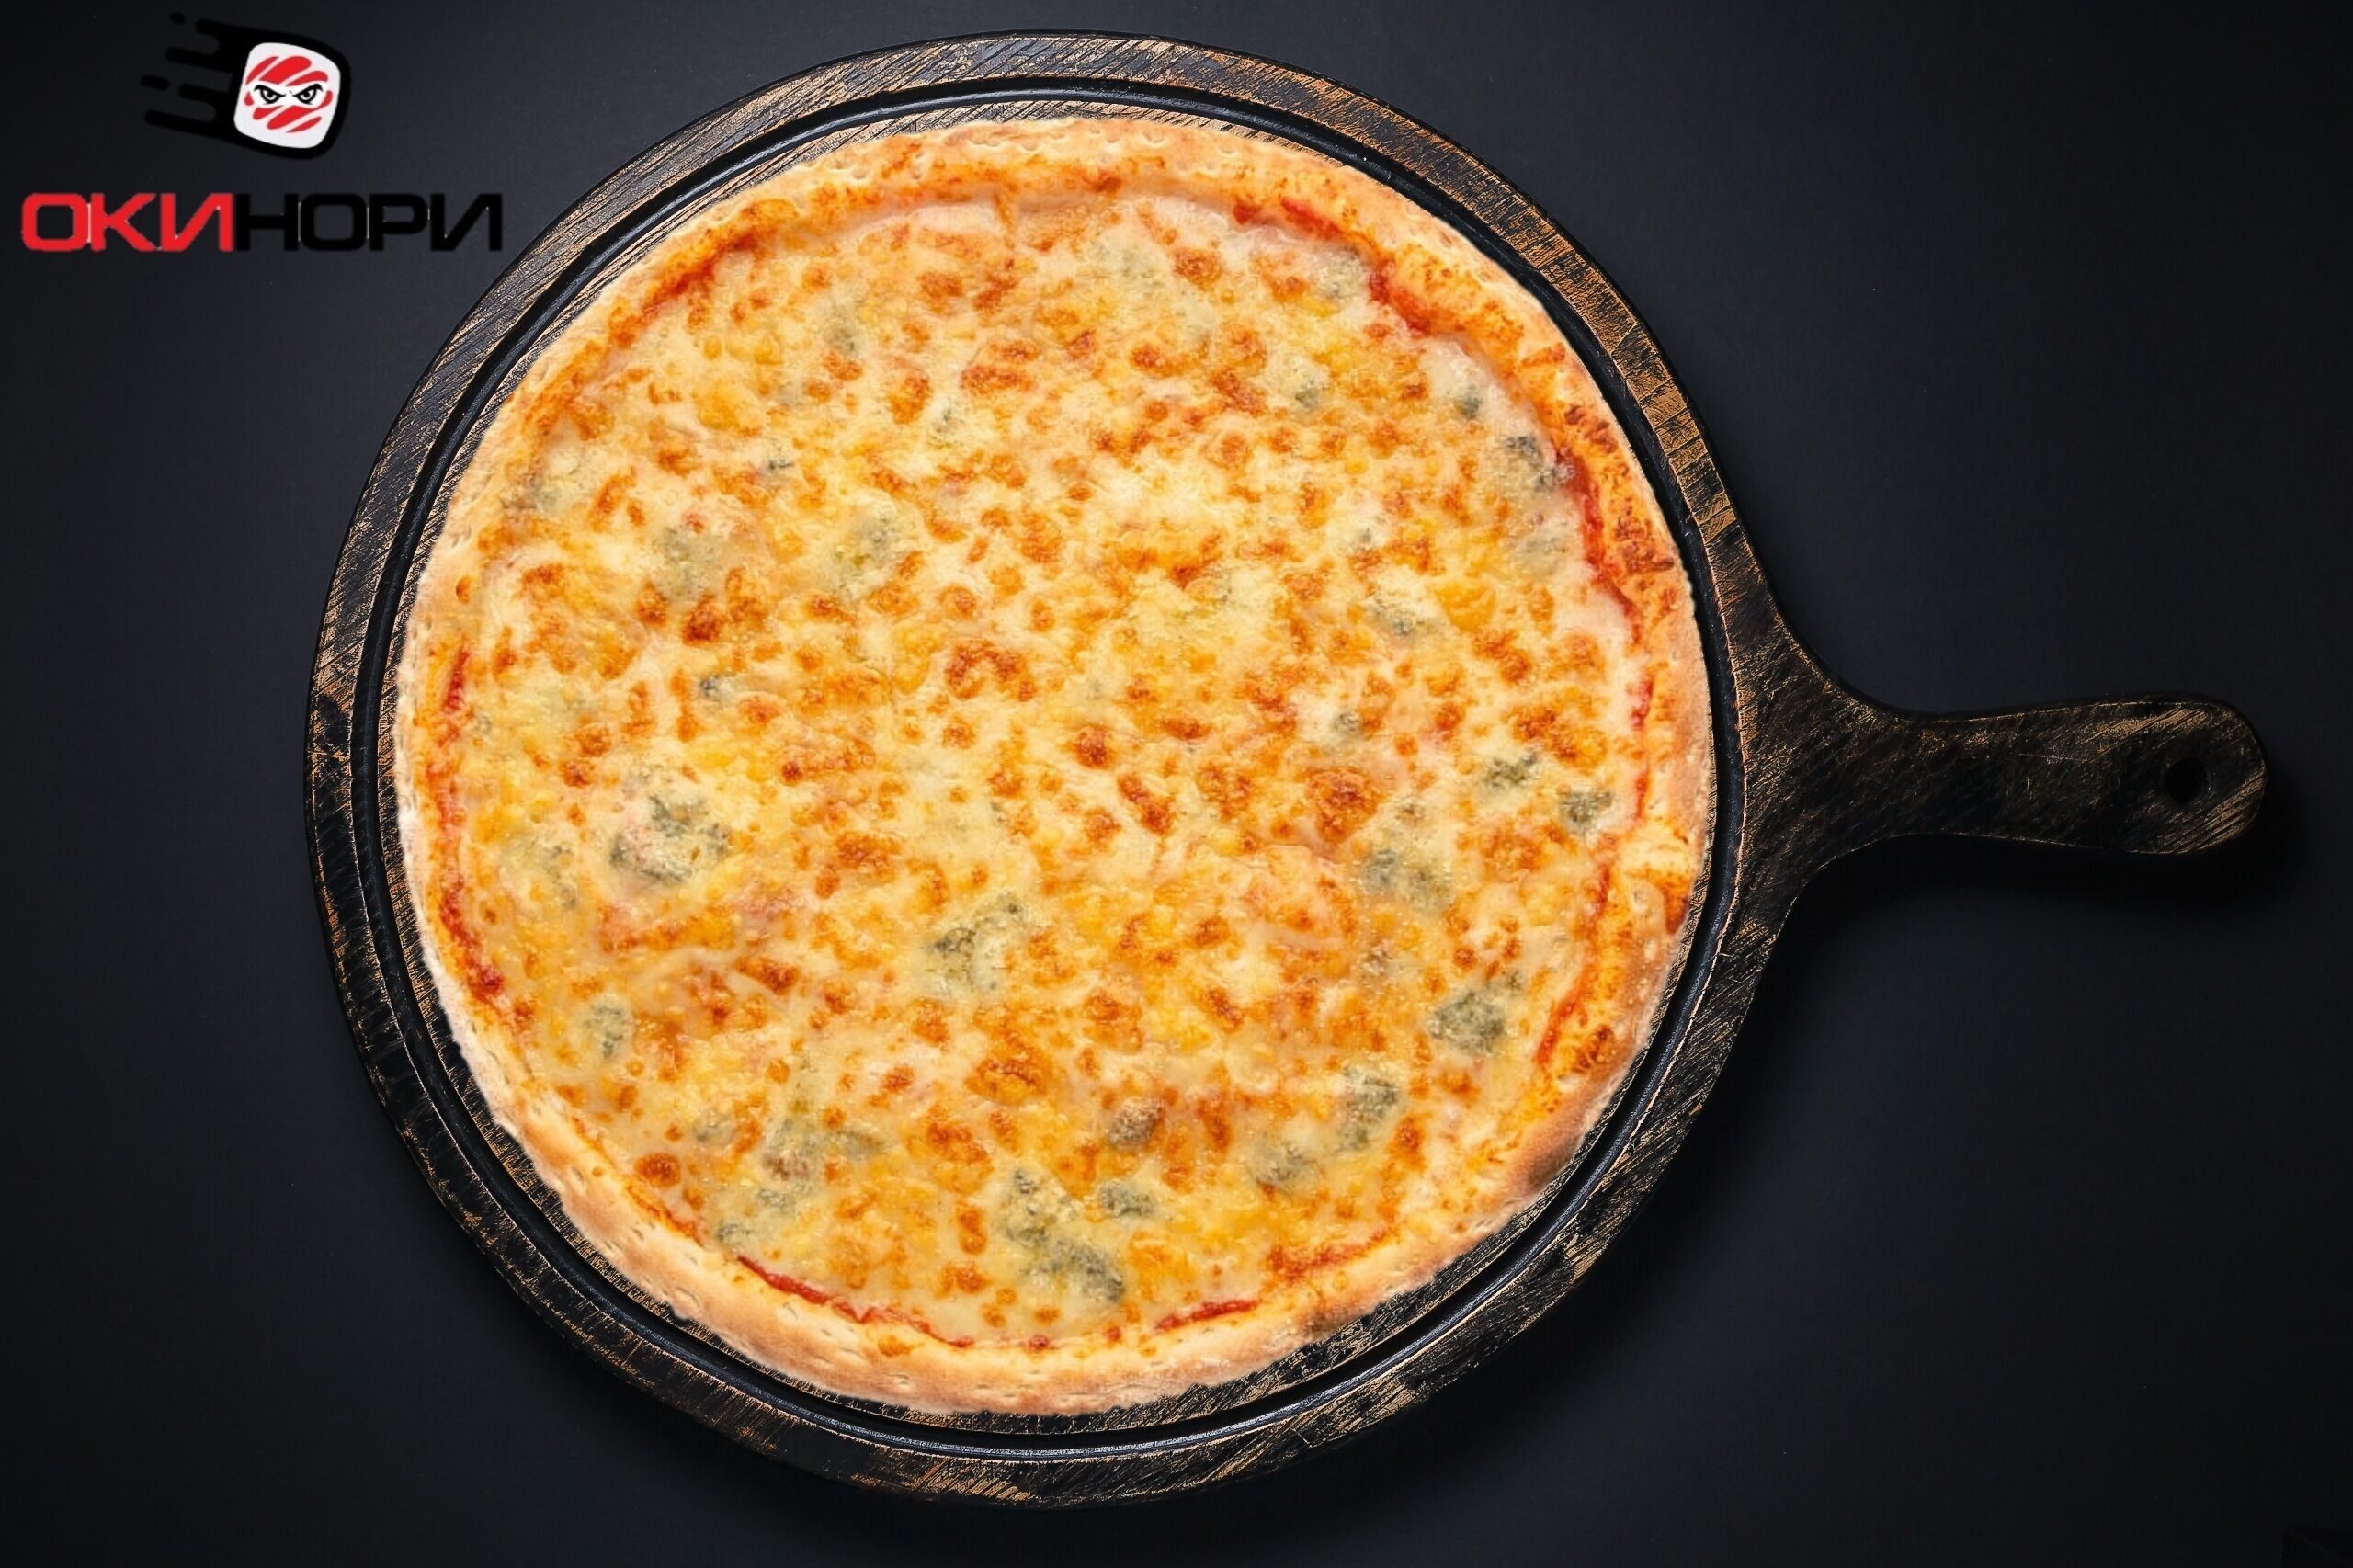 Камеди харламов пицца. Камеди клаб пицца 4 сыра. 3 Пиццы 4 сыра камеди. Камеди пицца.